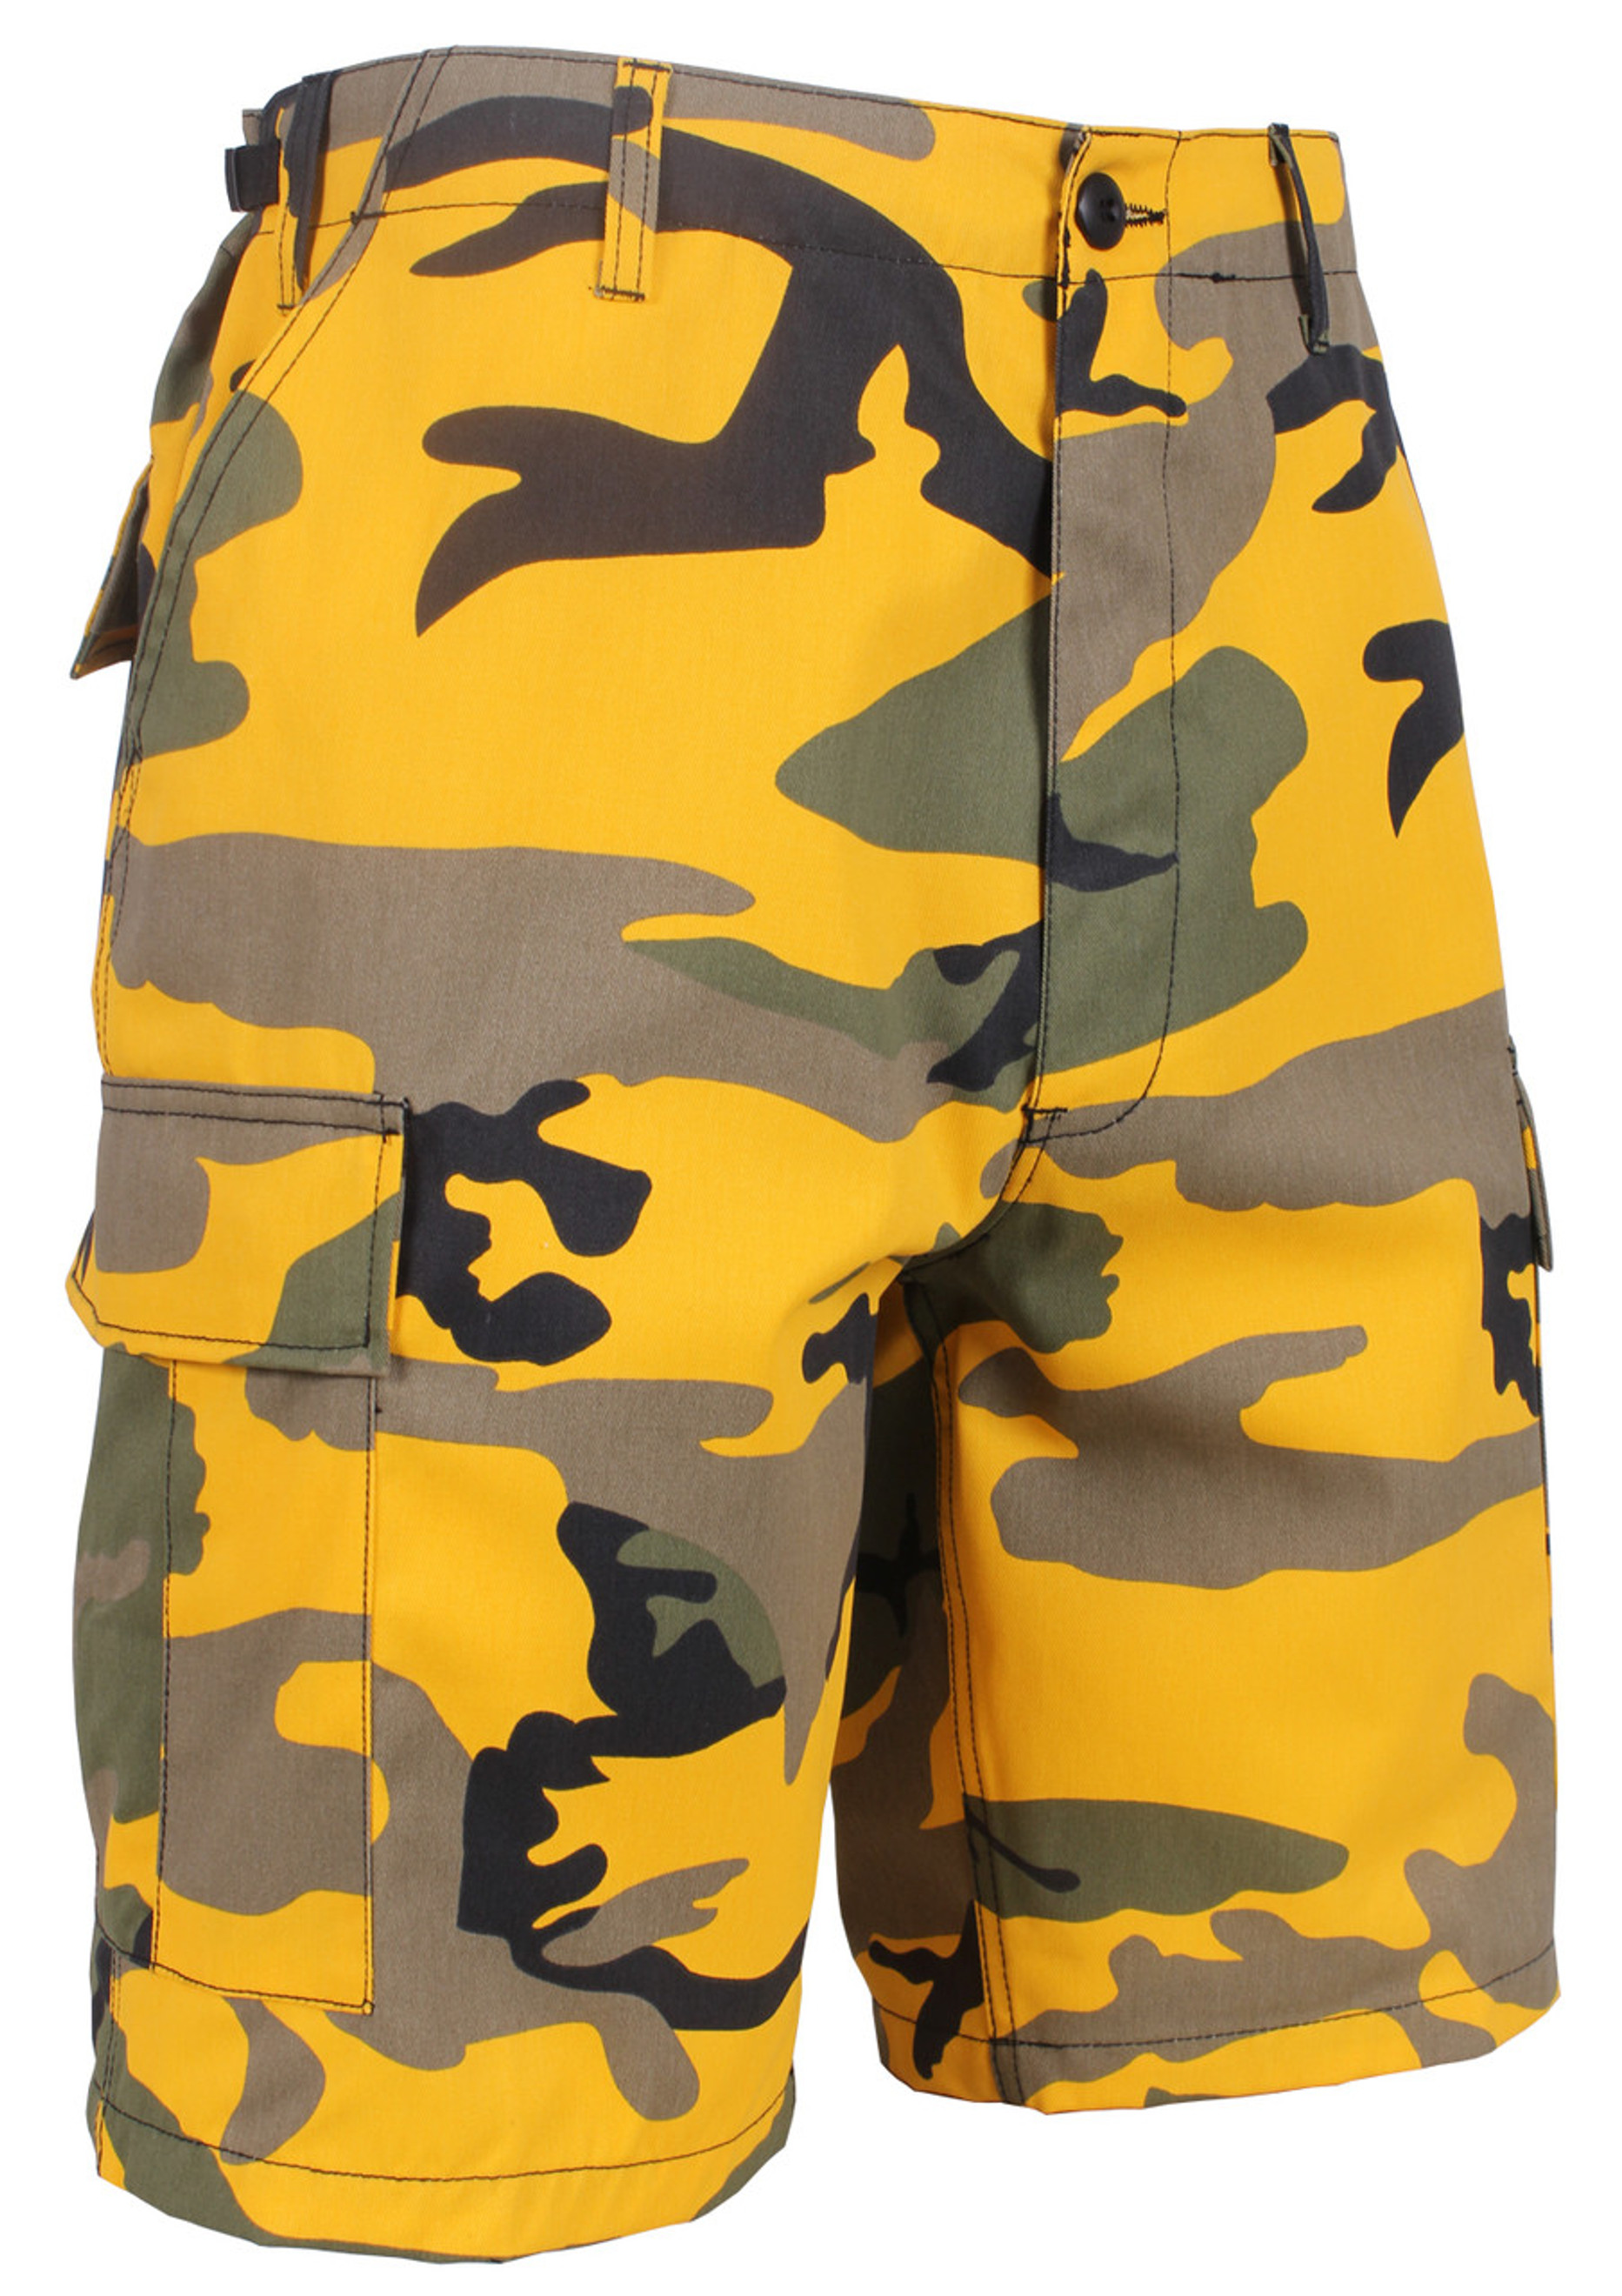 Rothco Colored Camo BDU Shorts - Stinger Yellow